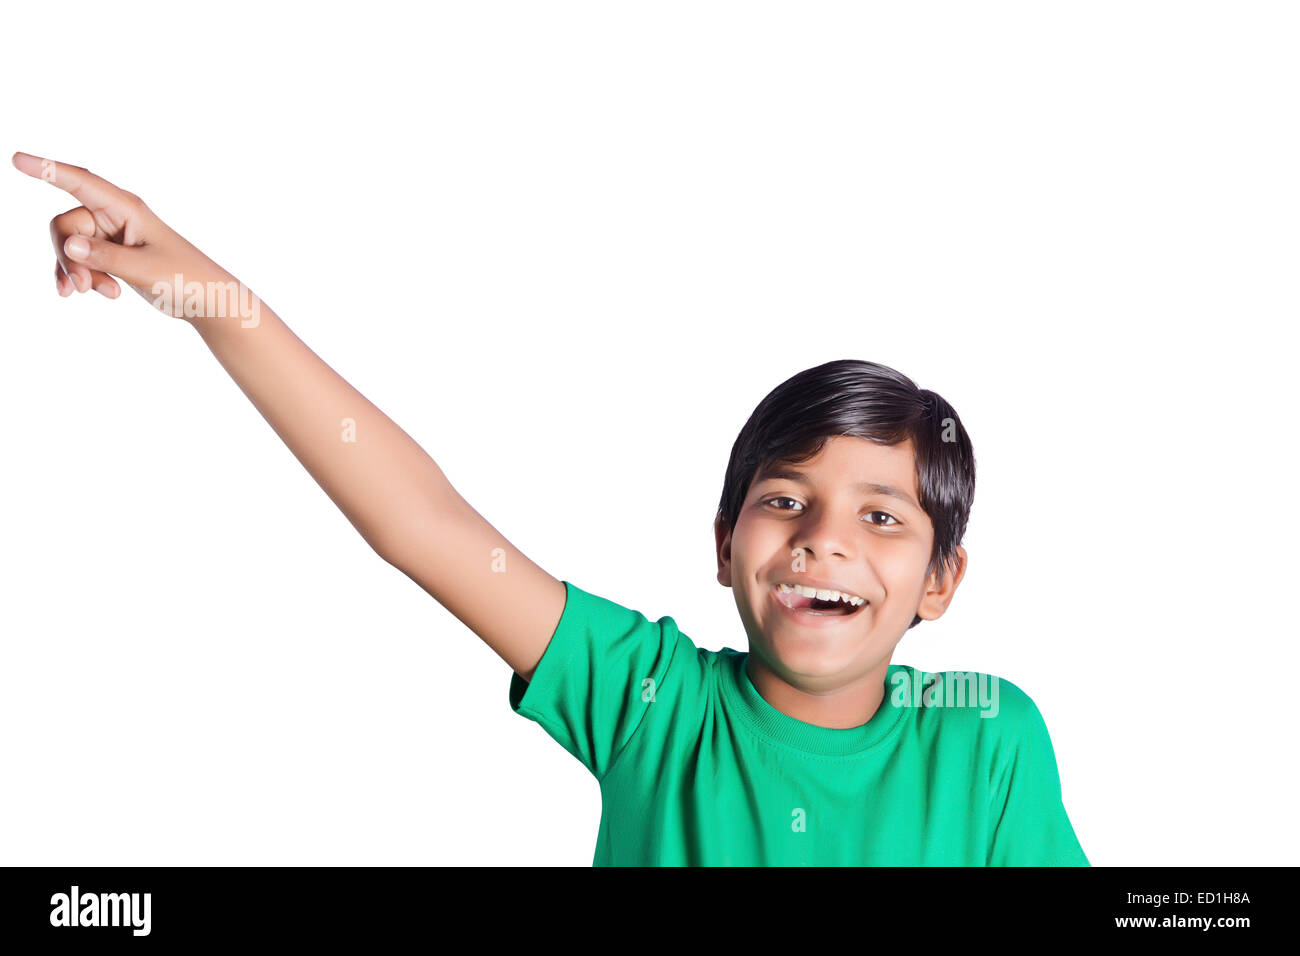 1 indian child boy showing  fun Stock Photo